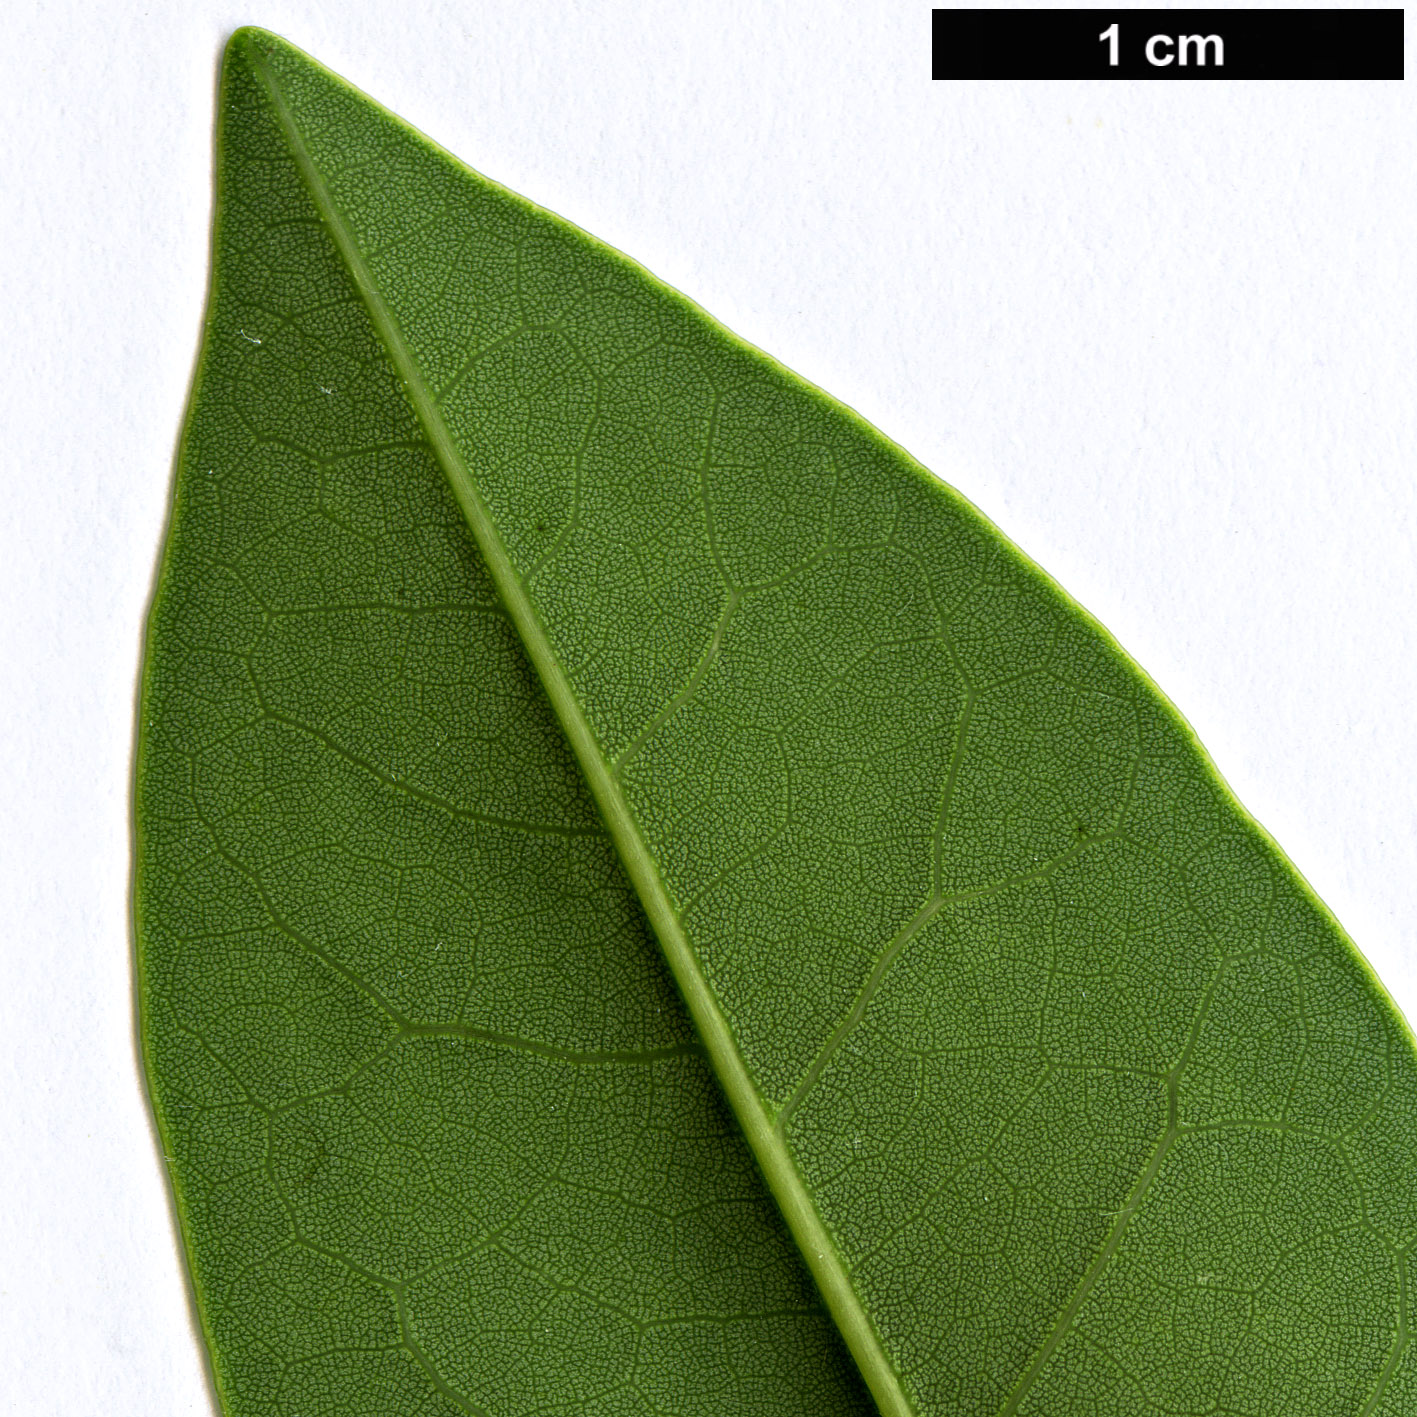 High resolution image: Family: Fabaceae - Genus: Erythrina - Taxon: crista-galli